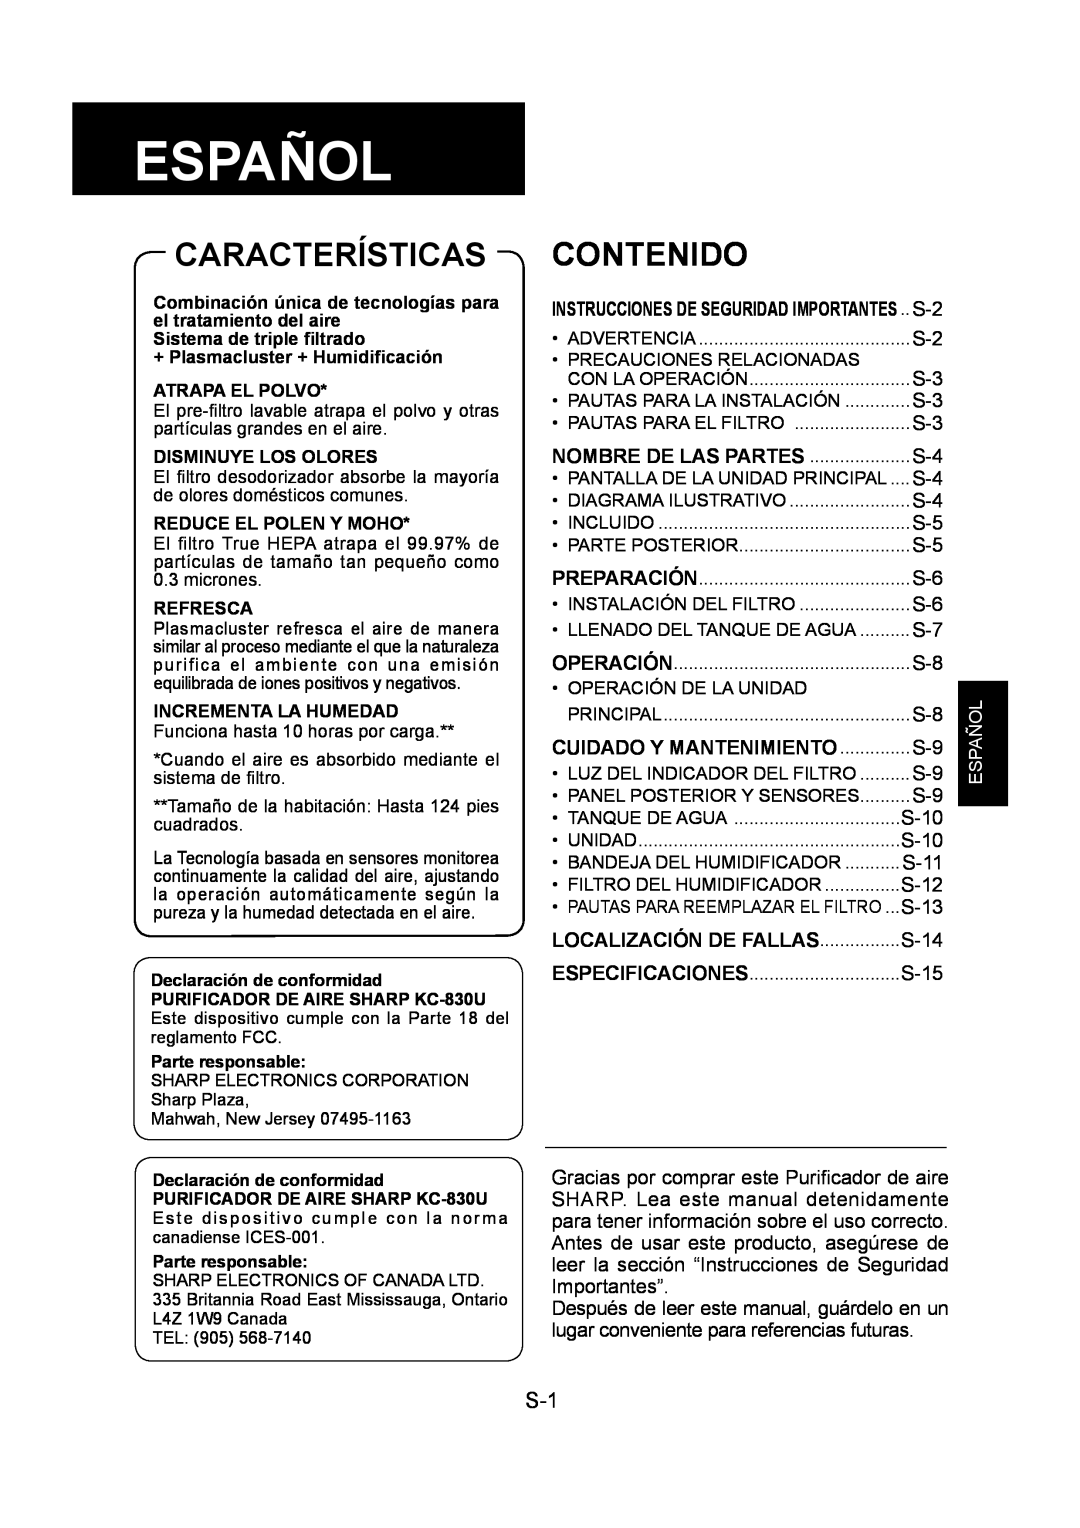 Sharp KC-830U operation manual Español, Características, Contenido 